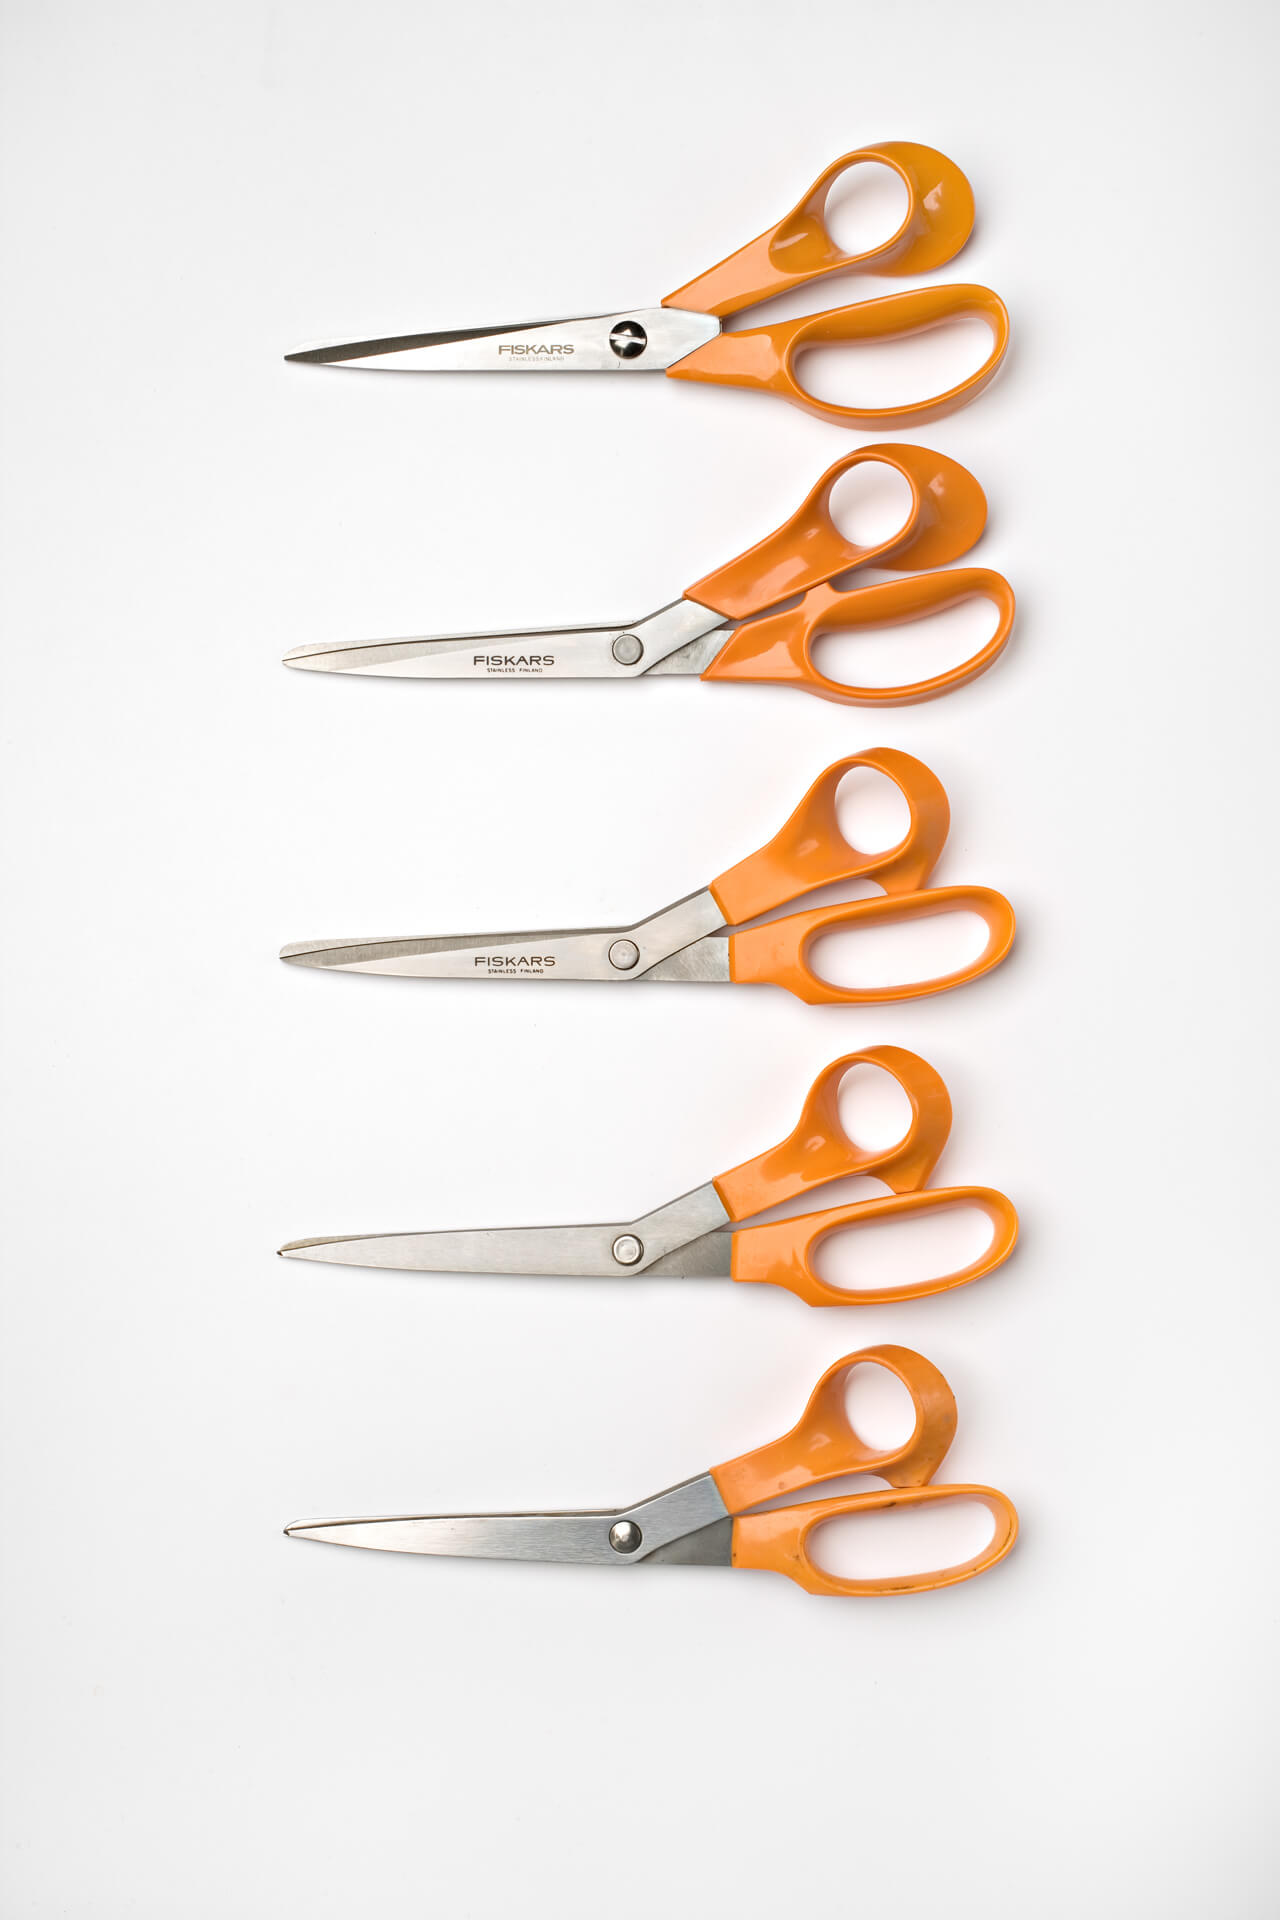 Development of the Fiskars scissors